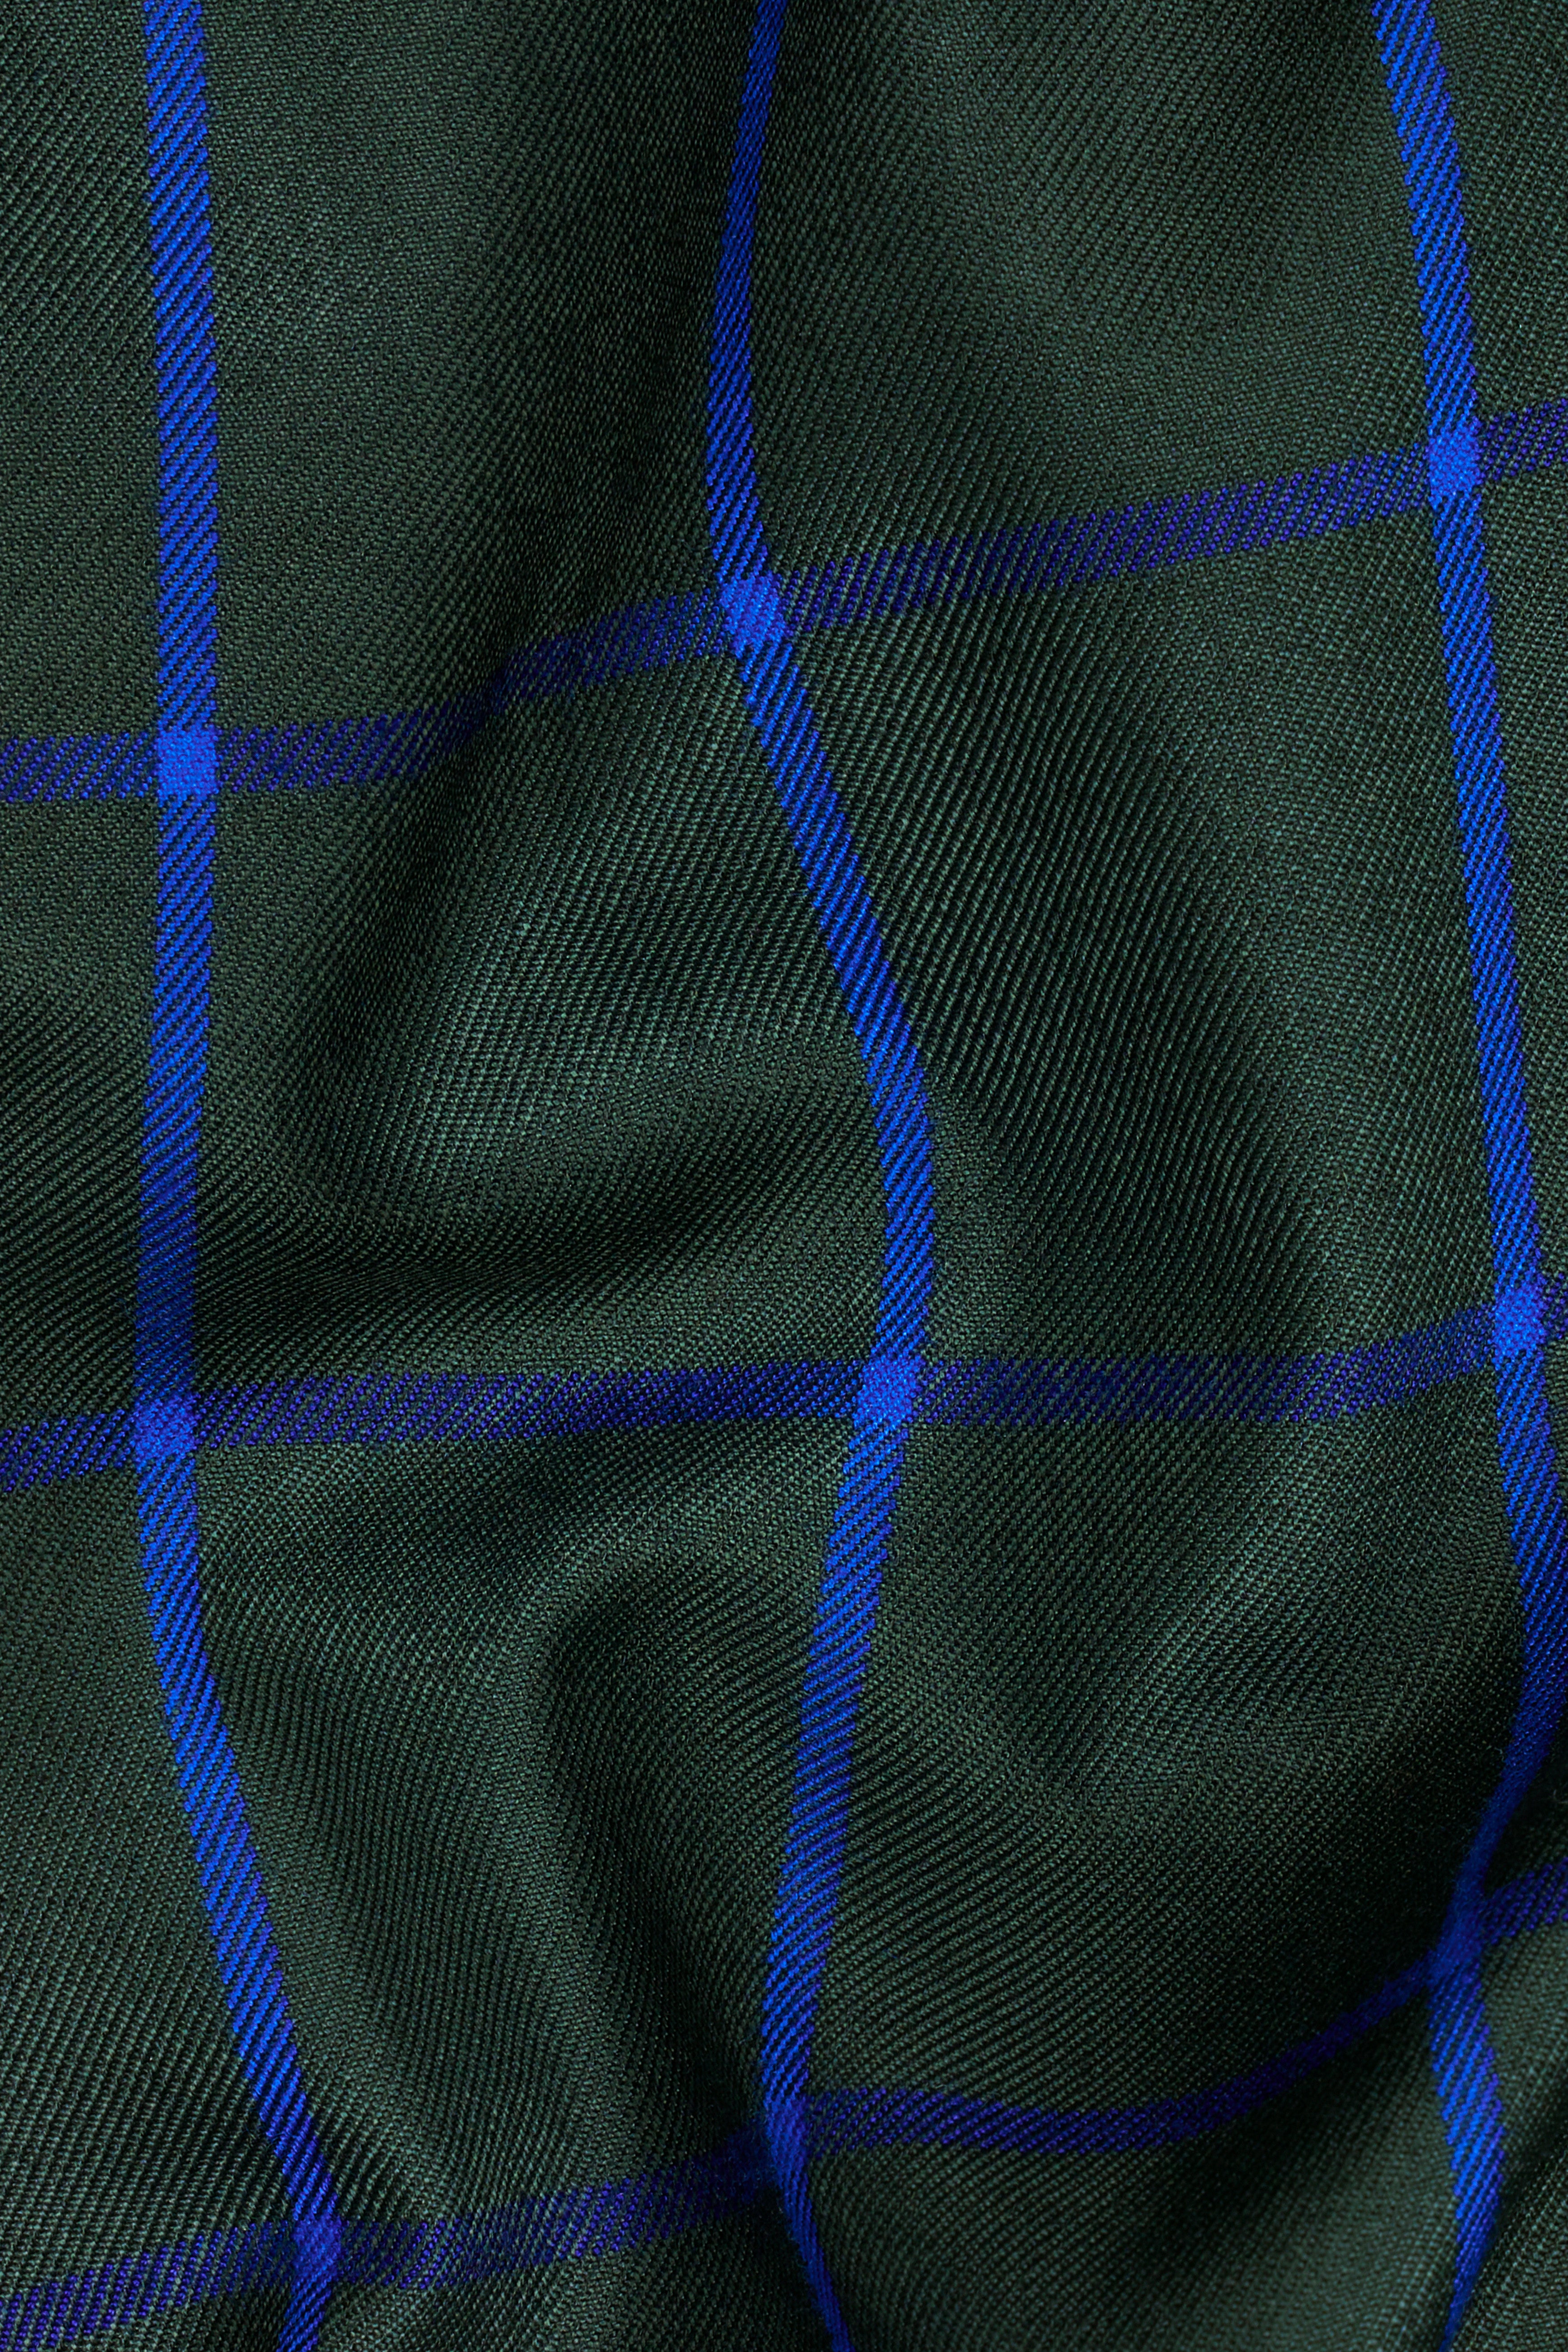 Kombu Green Checkered Wool Rich Suit ST2839-KWL-FB-D53-36,ST2839-KWL-FB-D53-38,ST2839-KWL-FB-D53-40,ST2839-KWL-FB-D53-42,ST2839-KWL-FB-D53-44,ST2839-KWL-FB-D53-46,ST2839-KWL-FB-D53-48,ST2839-KWL-FB-D53-50,ST2839-KWL-FB-D53-52,ST2839-KWL-FB-D53-54,ST2839-KWL-FB-D53-56,ST2839-KWL-FB-D53-58,ST2839-KWL-FB-D53-60